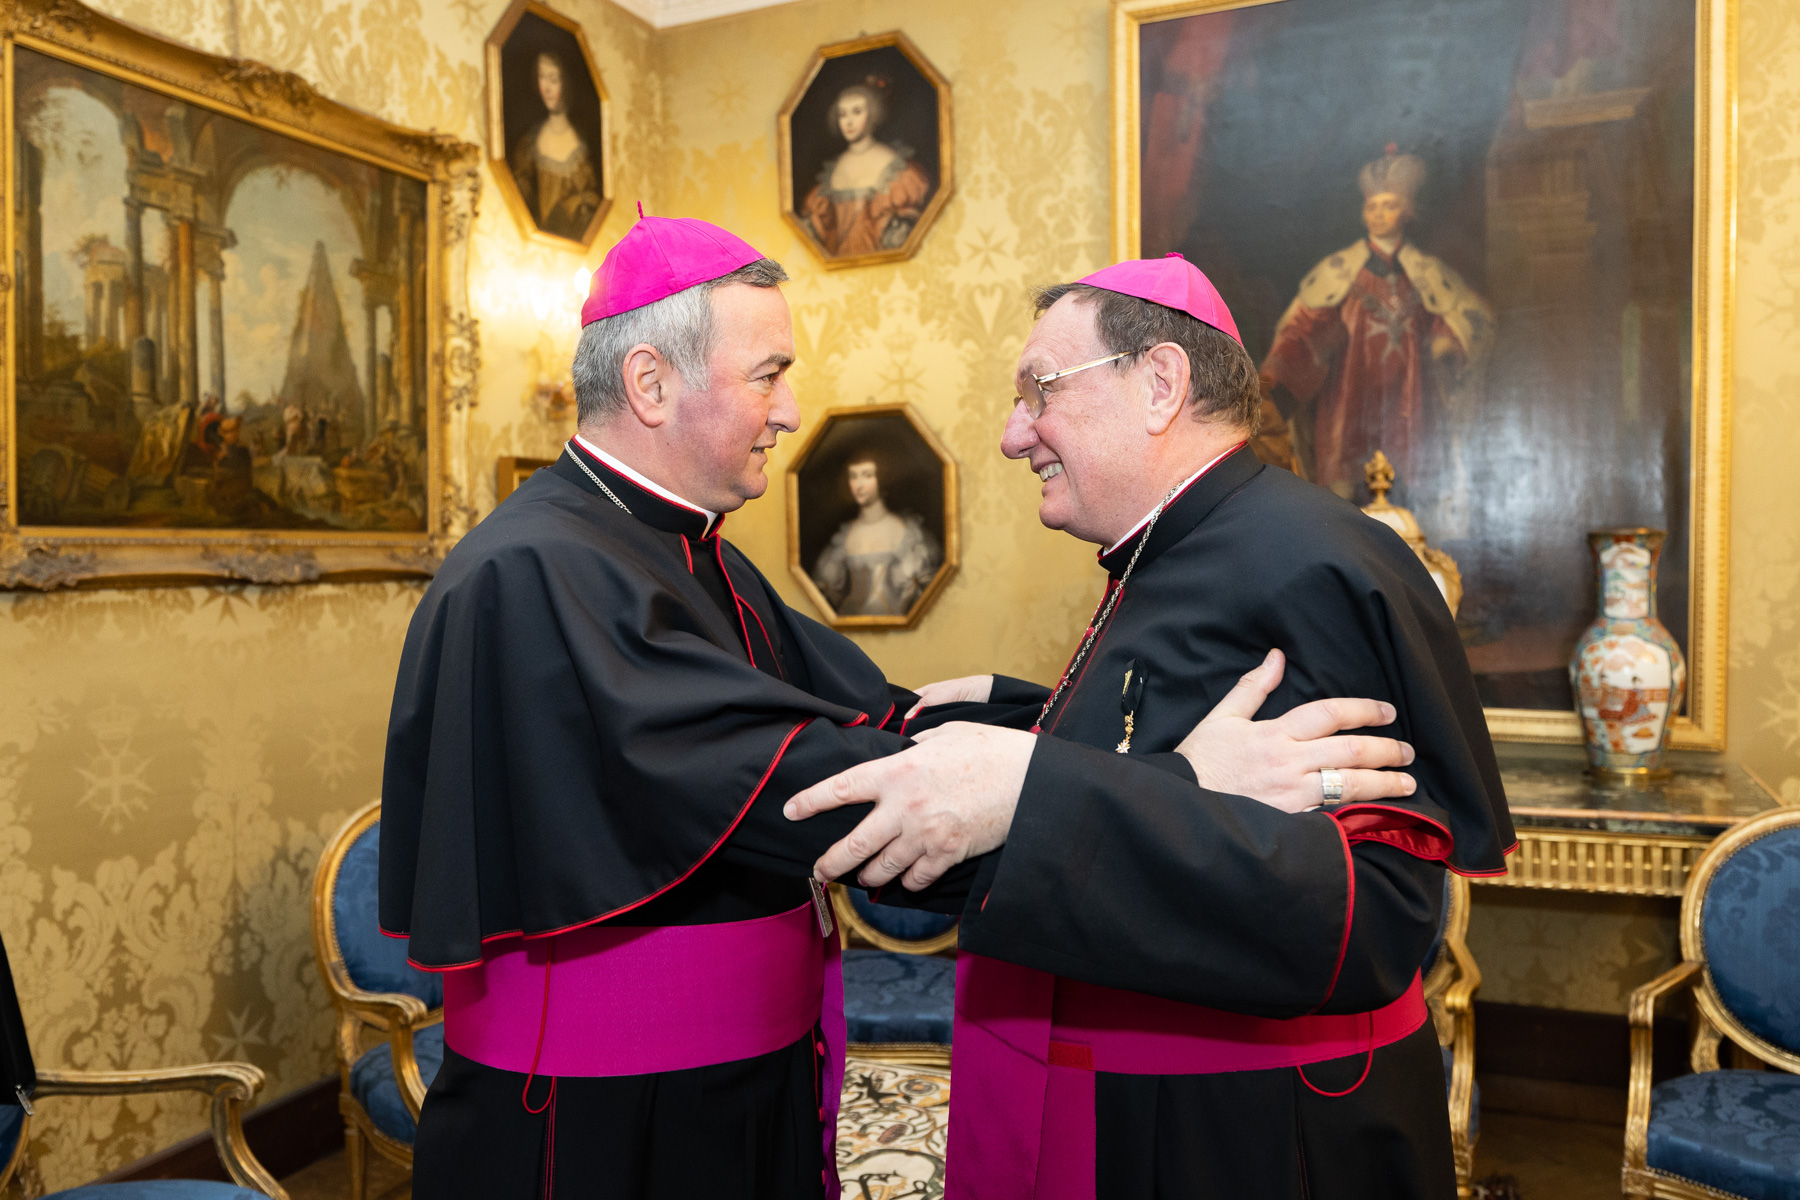 Archbishop of Tiranë-Durrës Mgr. Arjan Dodaj received by Grand Chancellor and Grand Hospitaller